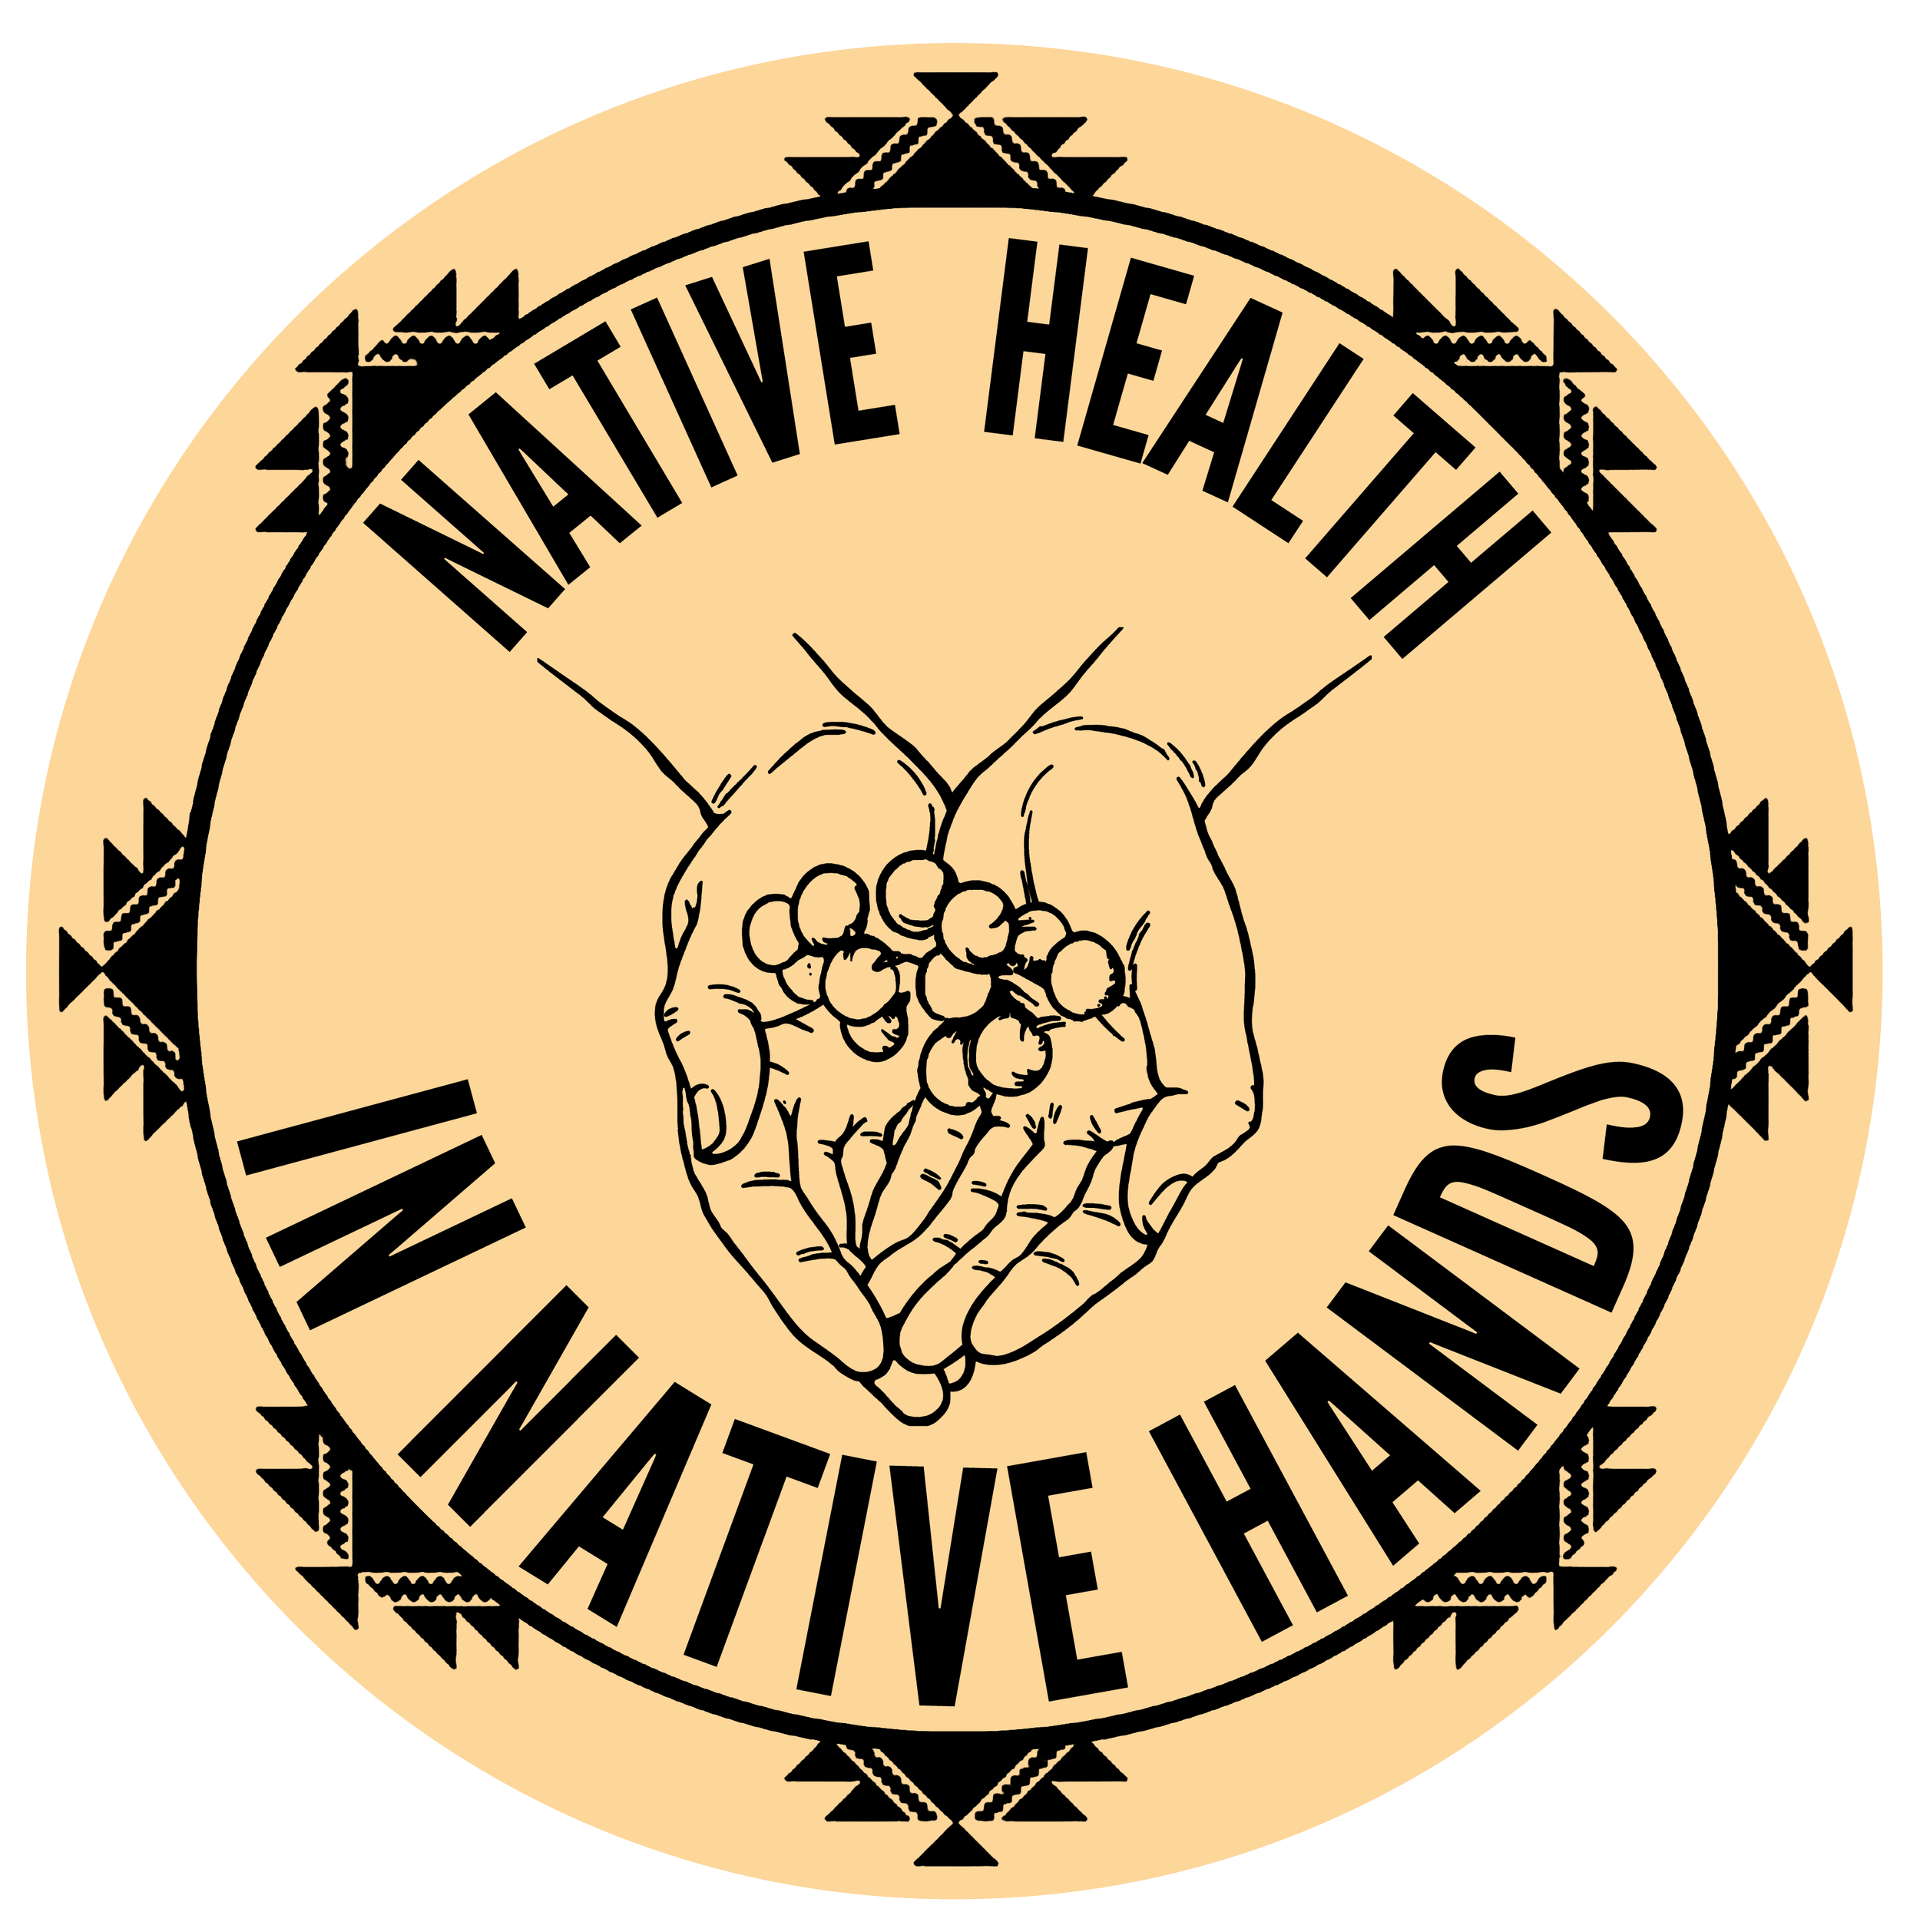 Native Health in Native Hands